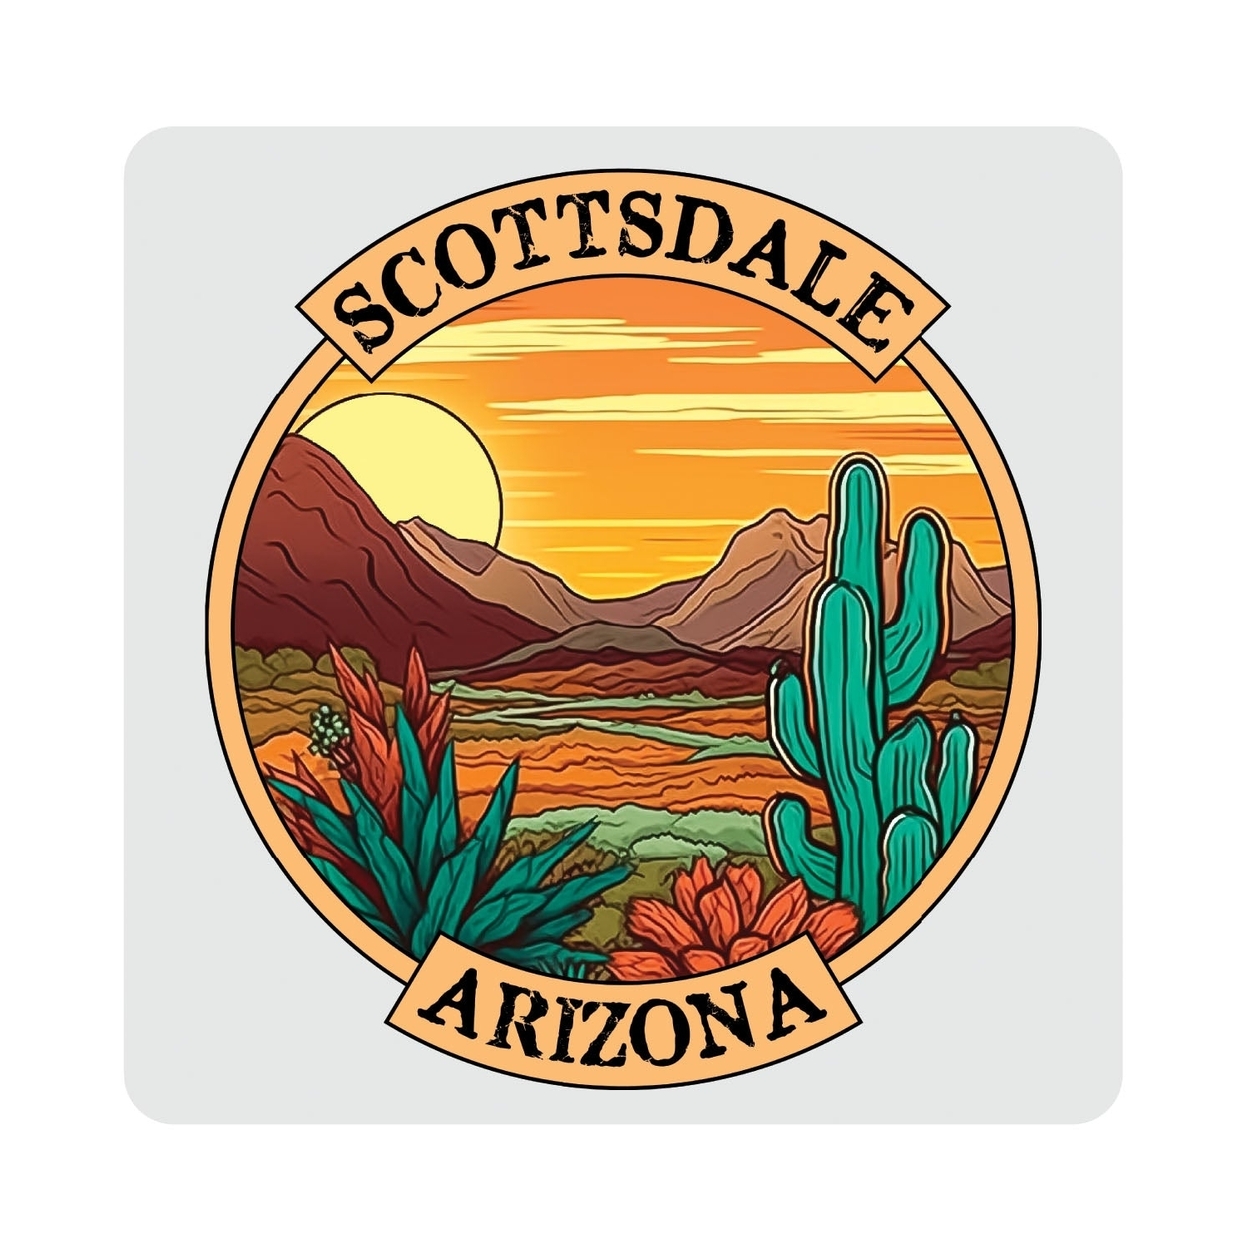 Scottsdale Arizona Design A Souvenir 4x4-Inch Coaster Acrylic 4 Pack